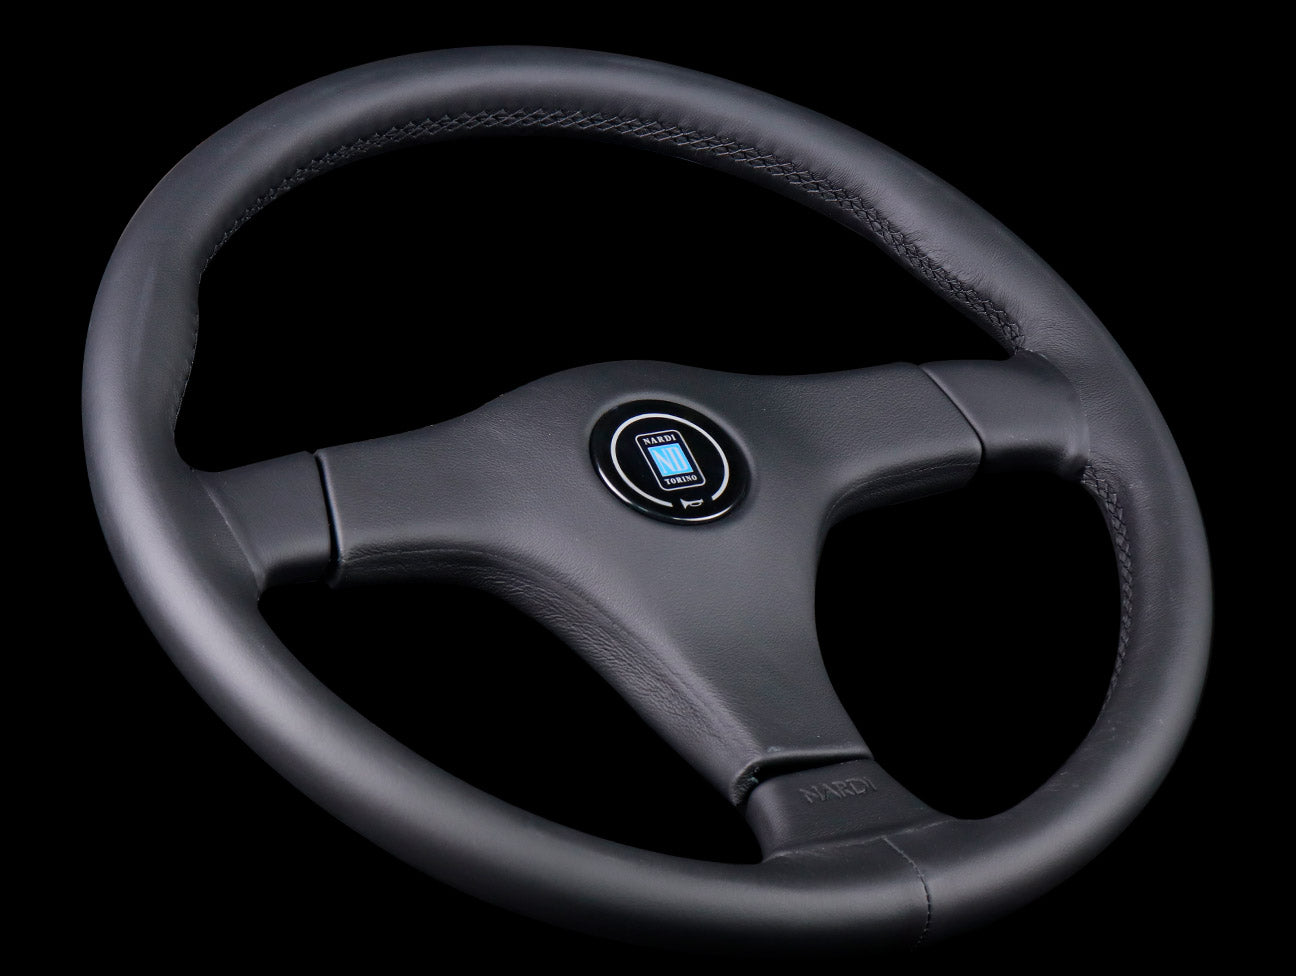 Nardi Gara 3/3 365mm Steering Wheel - Black Leather / Black Stitch